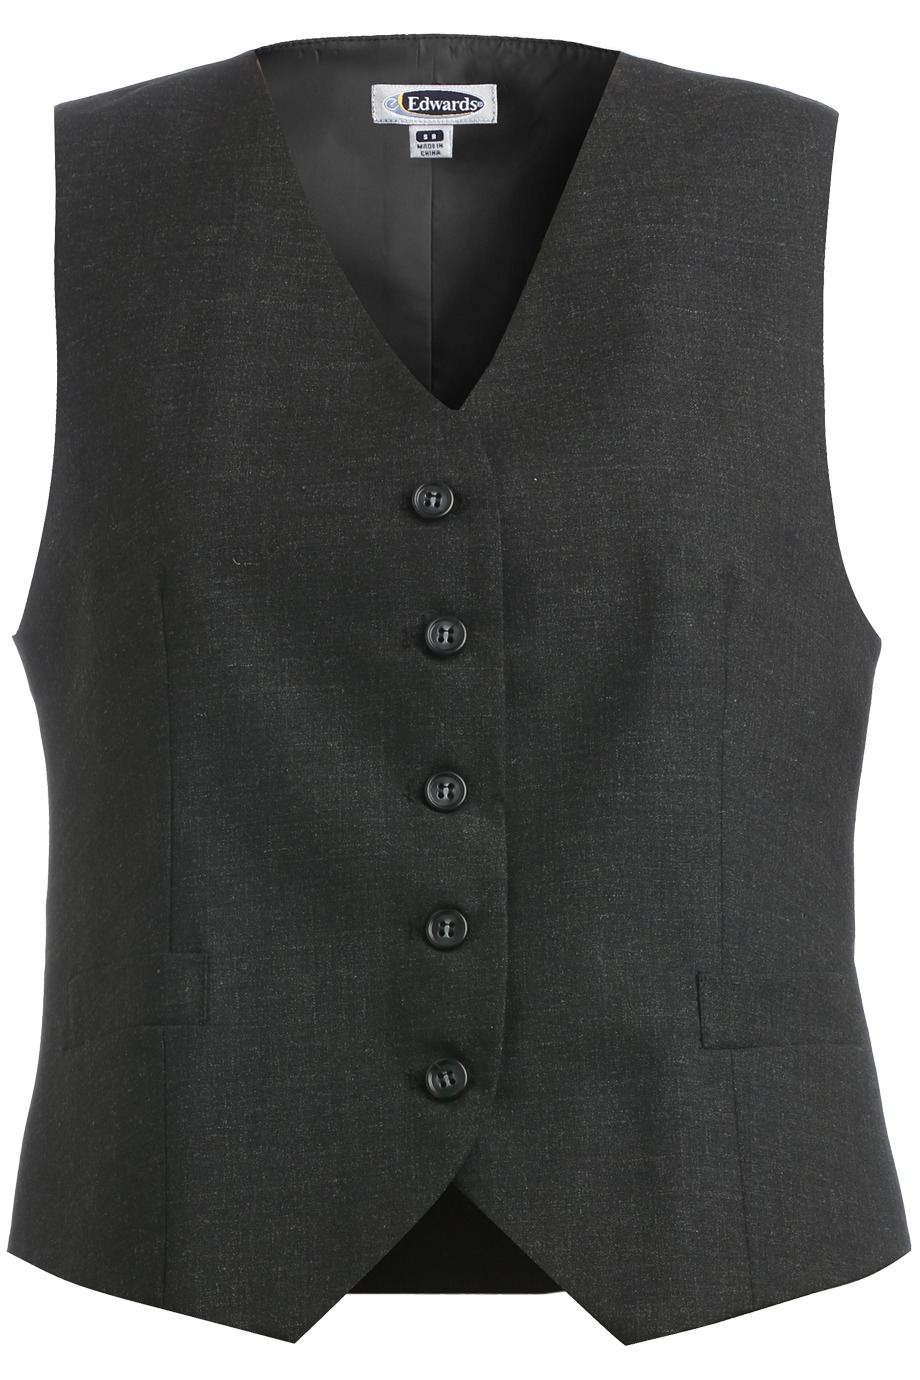 Edwards Garment 7680 - High Button Vest